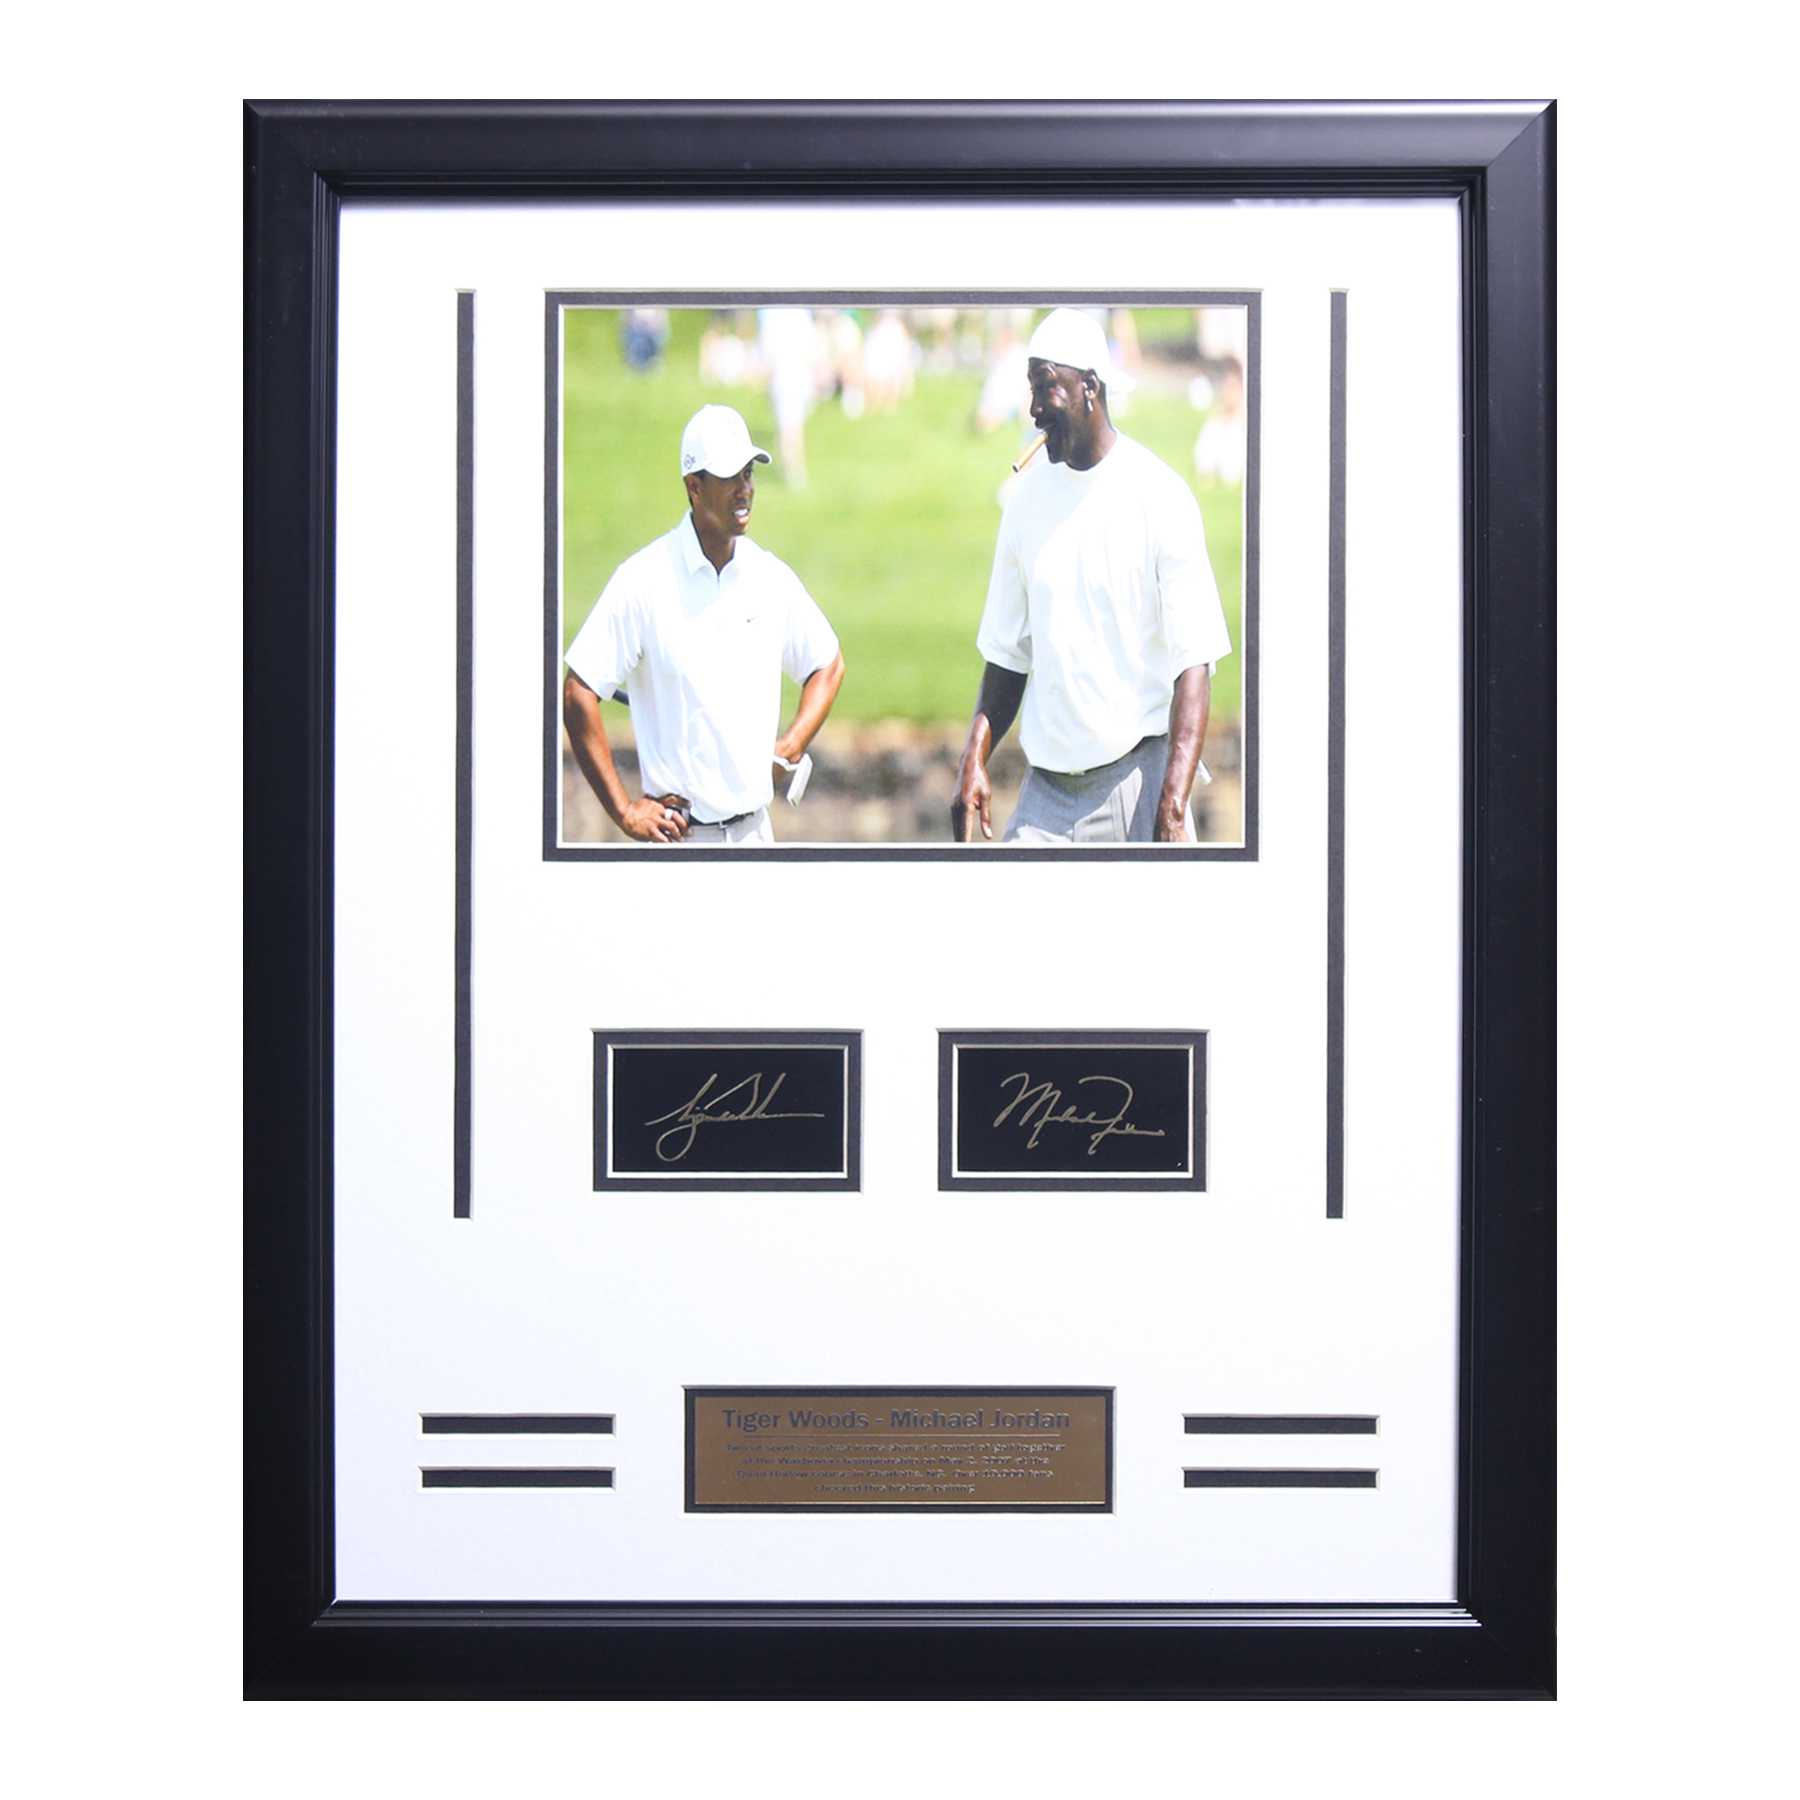 Tiger Woods and Michael Jordan Engraved Signature Frame